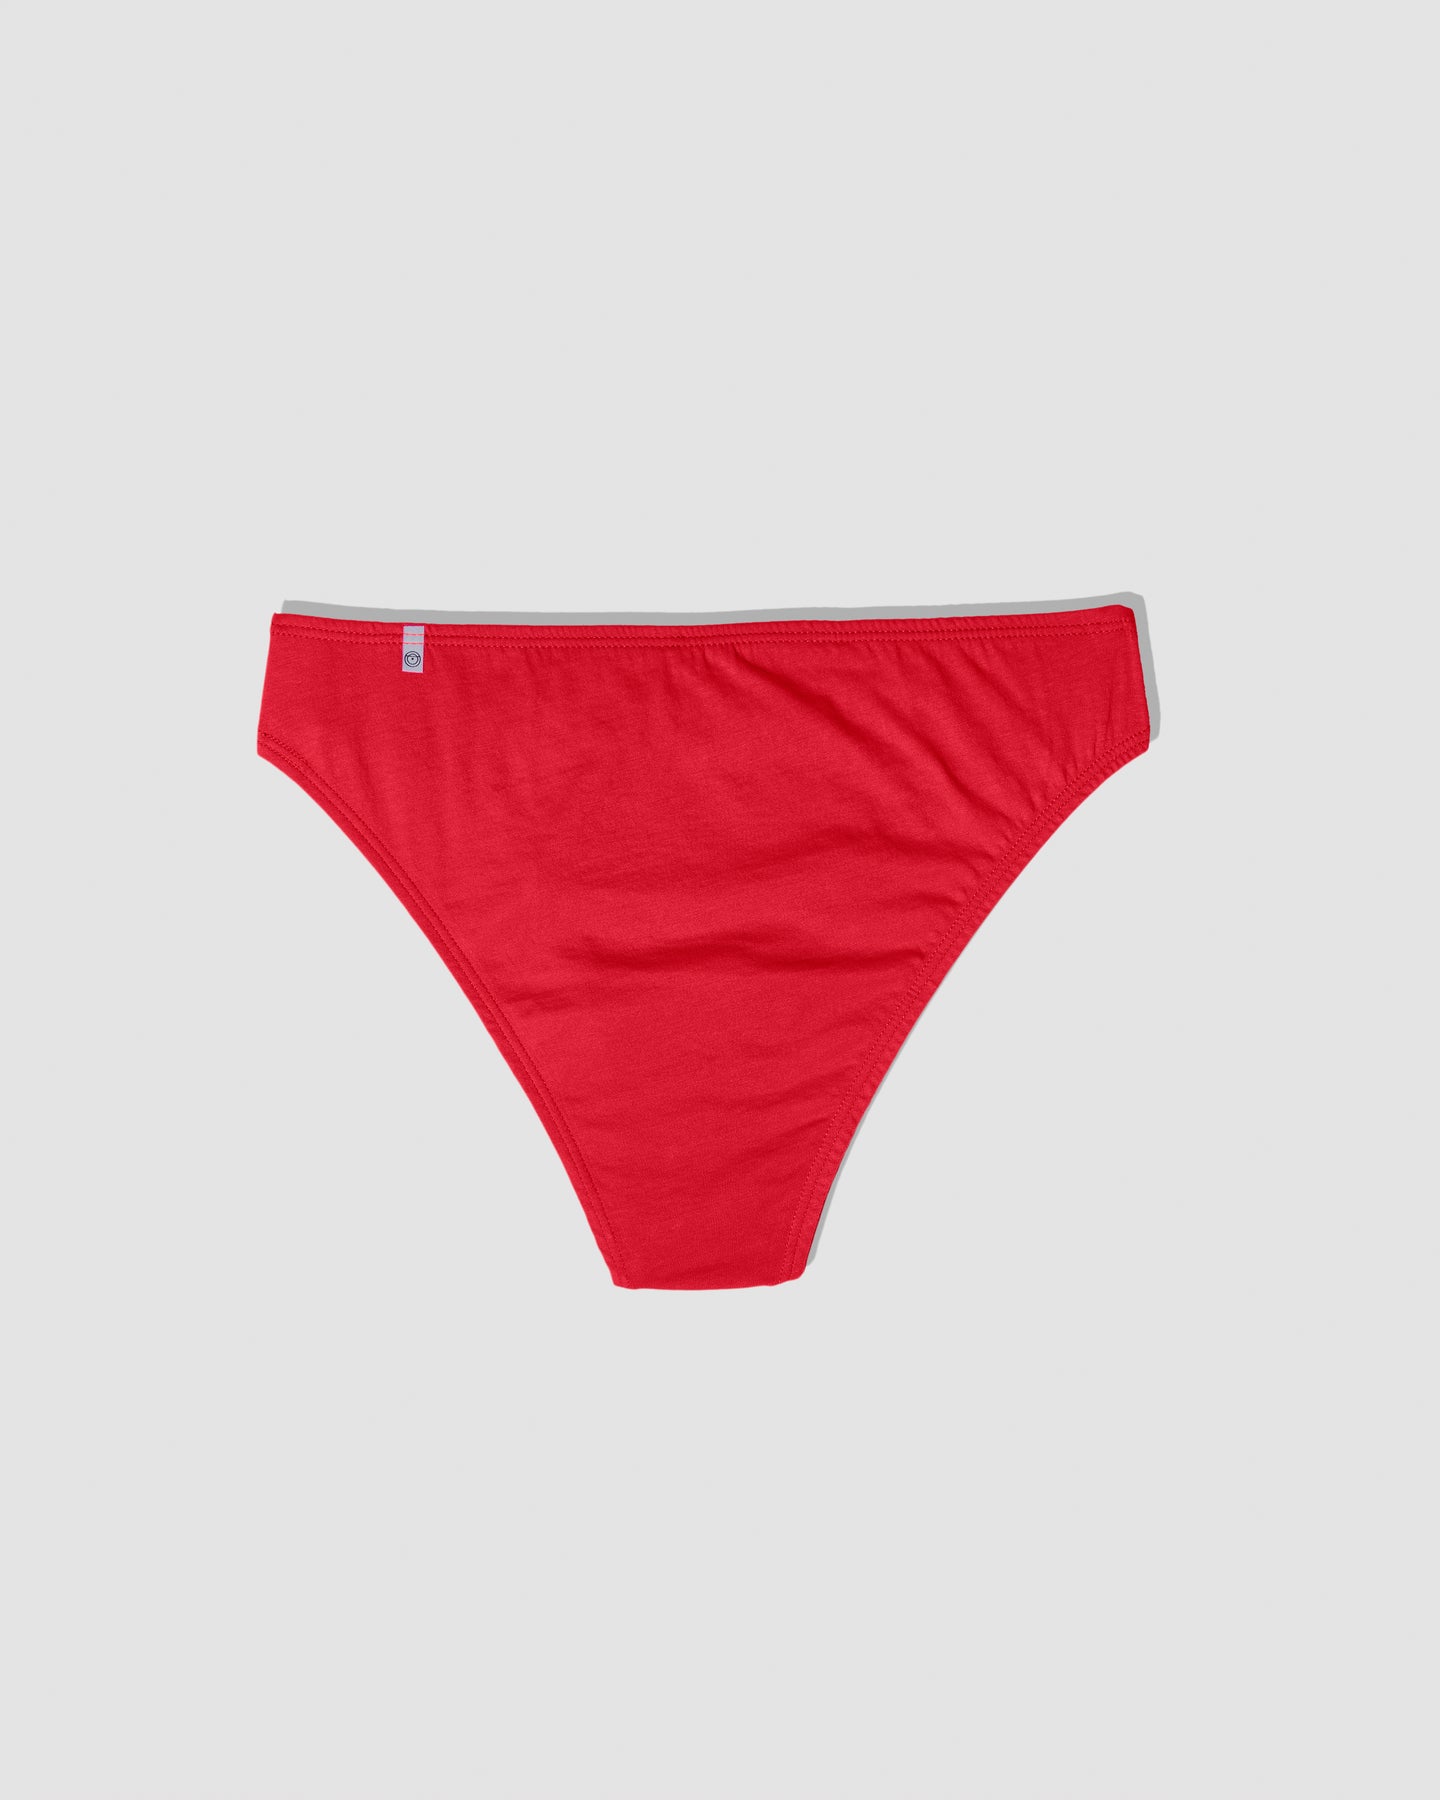 Cathalem French Cut Underwear for Women Women Panties Lace Cutout Hollow  Waist Women Cotton Bikini Underwear Pack Underpants Red Medium 